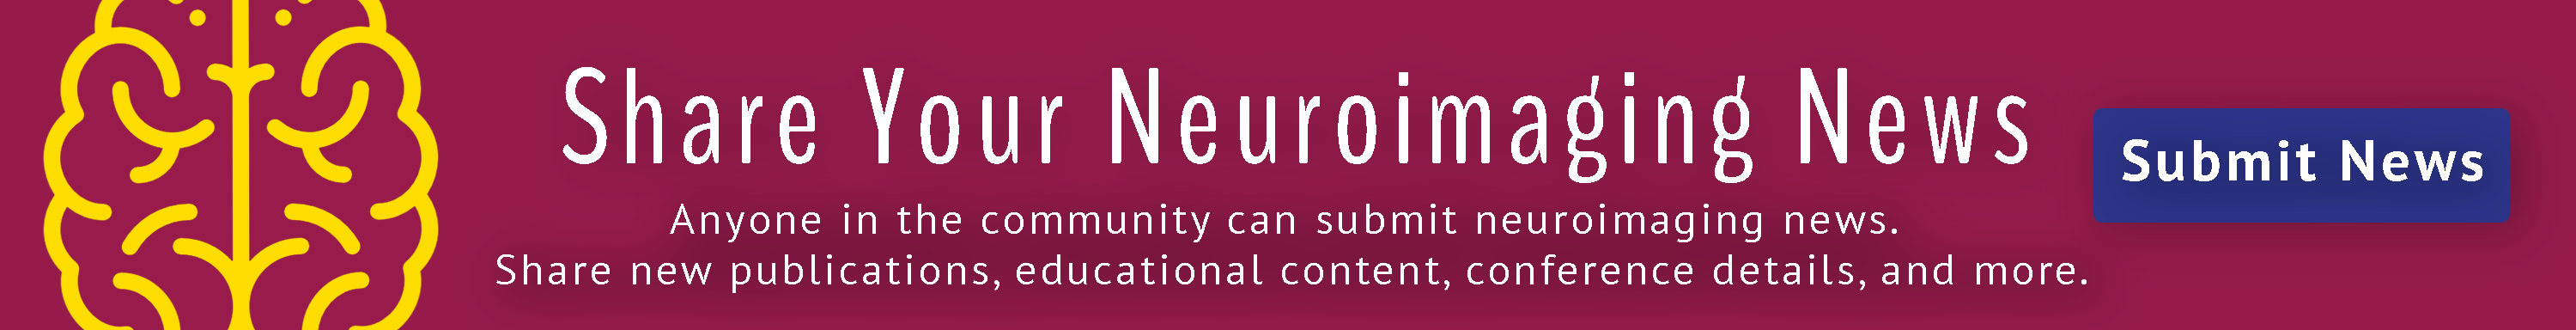 Share Your Neuroimaging News